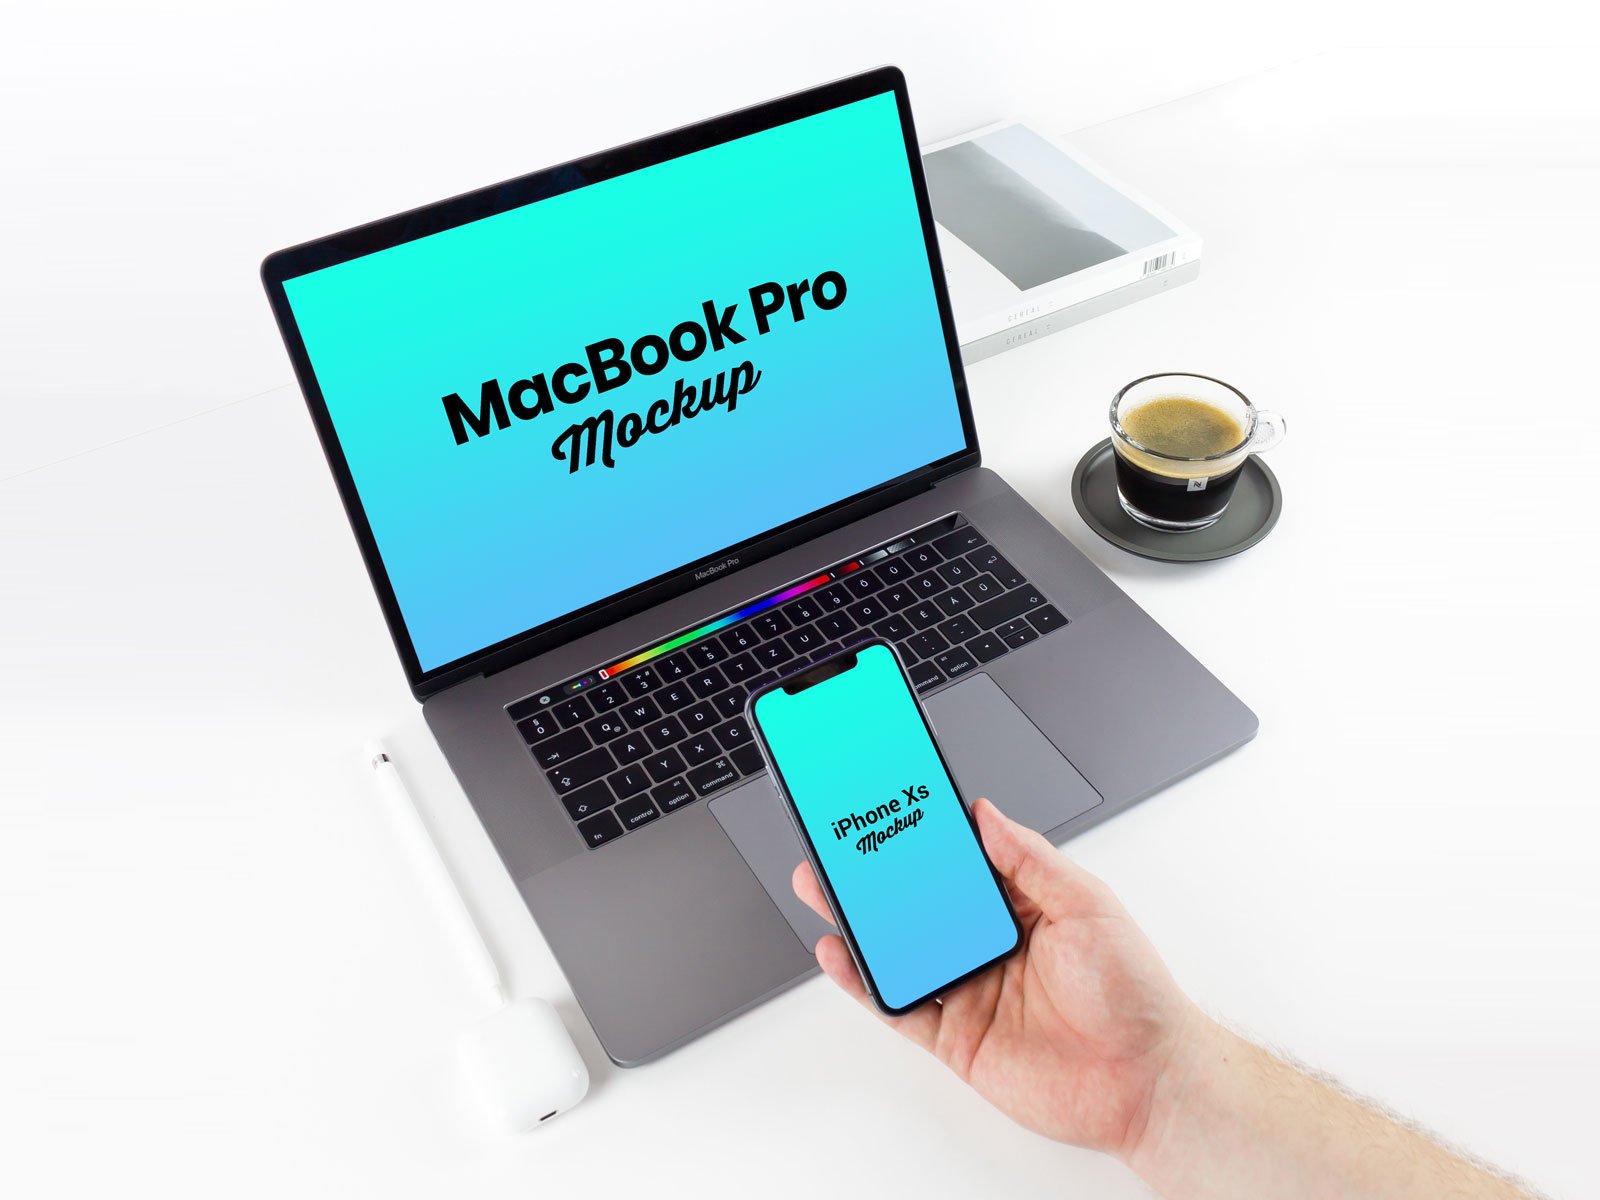 Download Free iPhone XS & MacBook Pro 2018 Mockup PSD | Designbolts